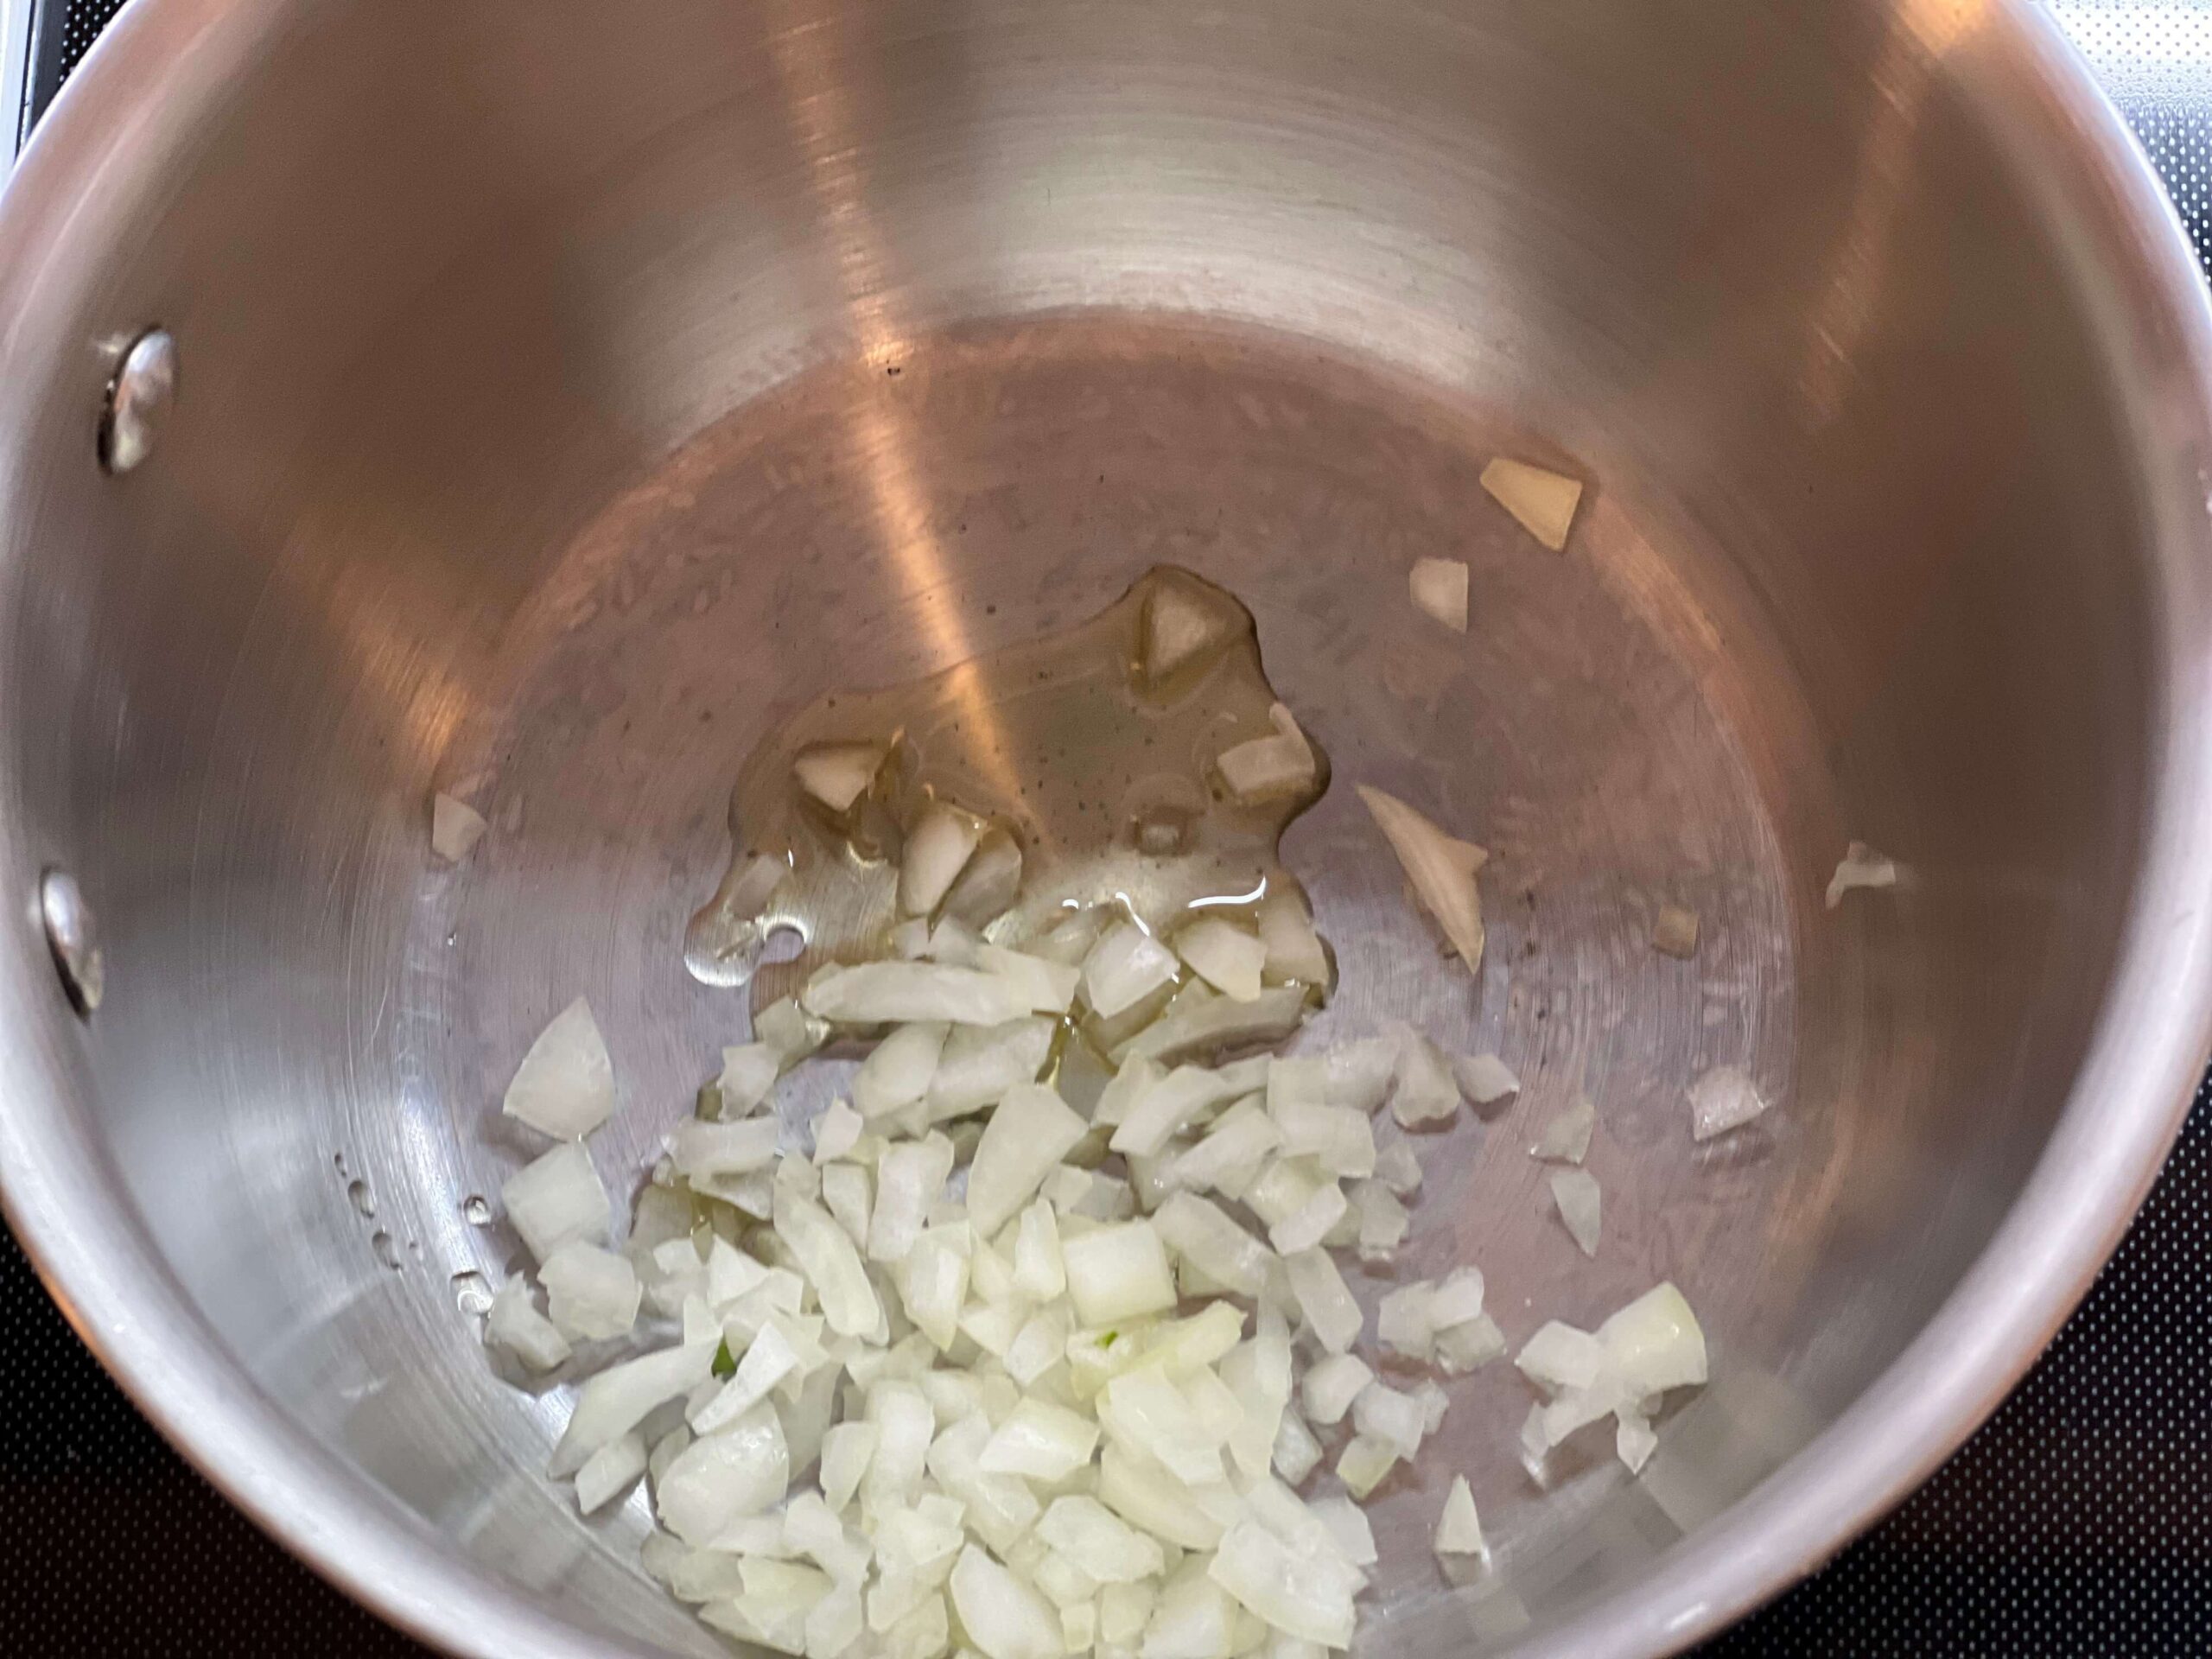 Saute onions and garlic.